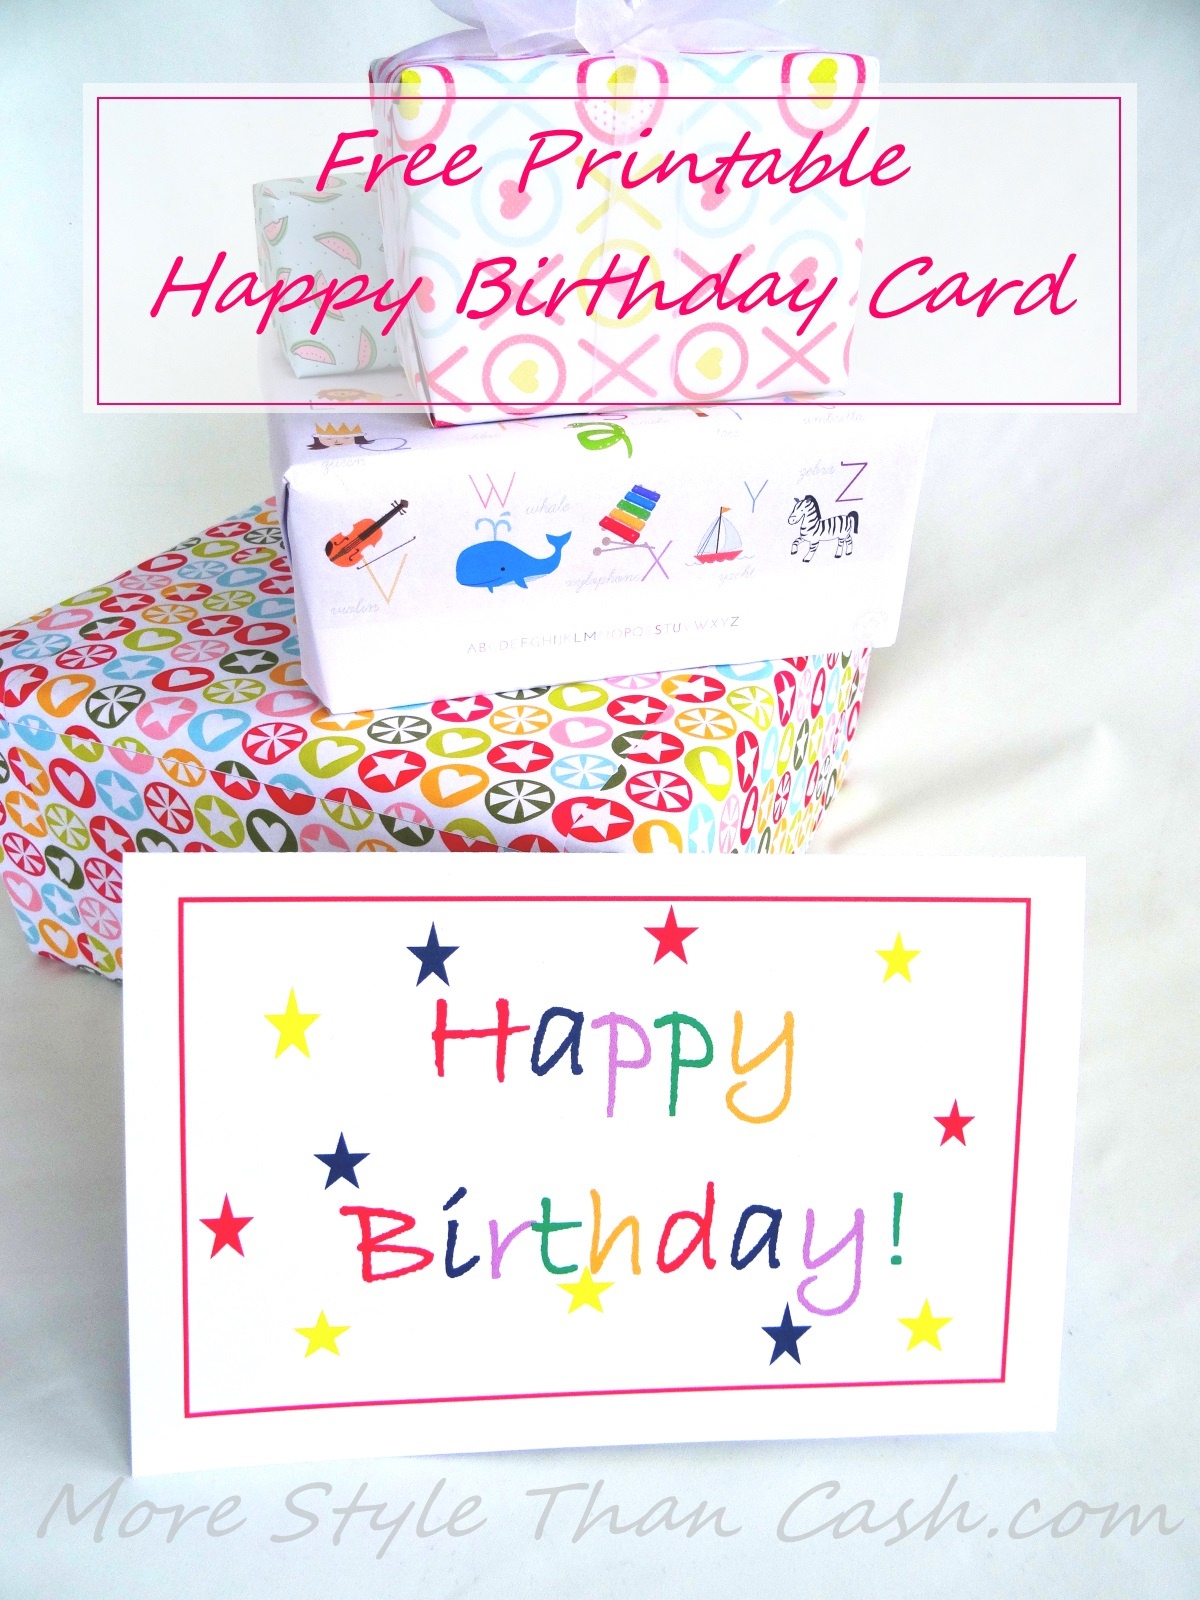 Free Printable Birthday Card - Free Printable Happy Birthday Cards